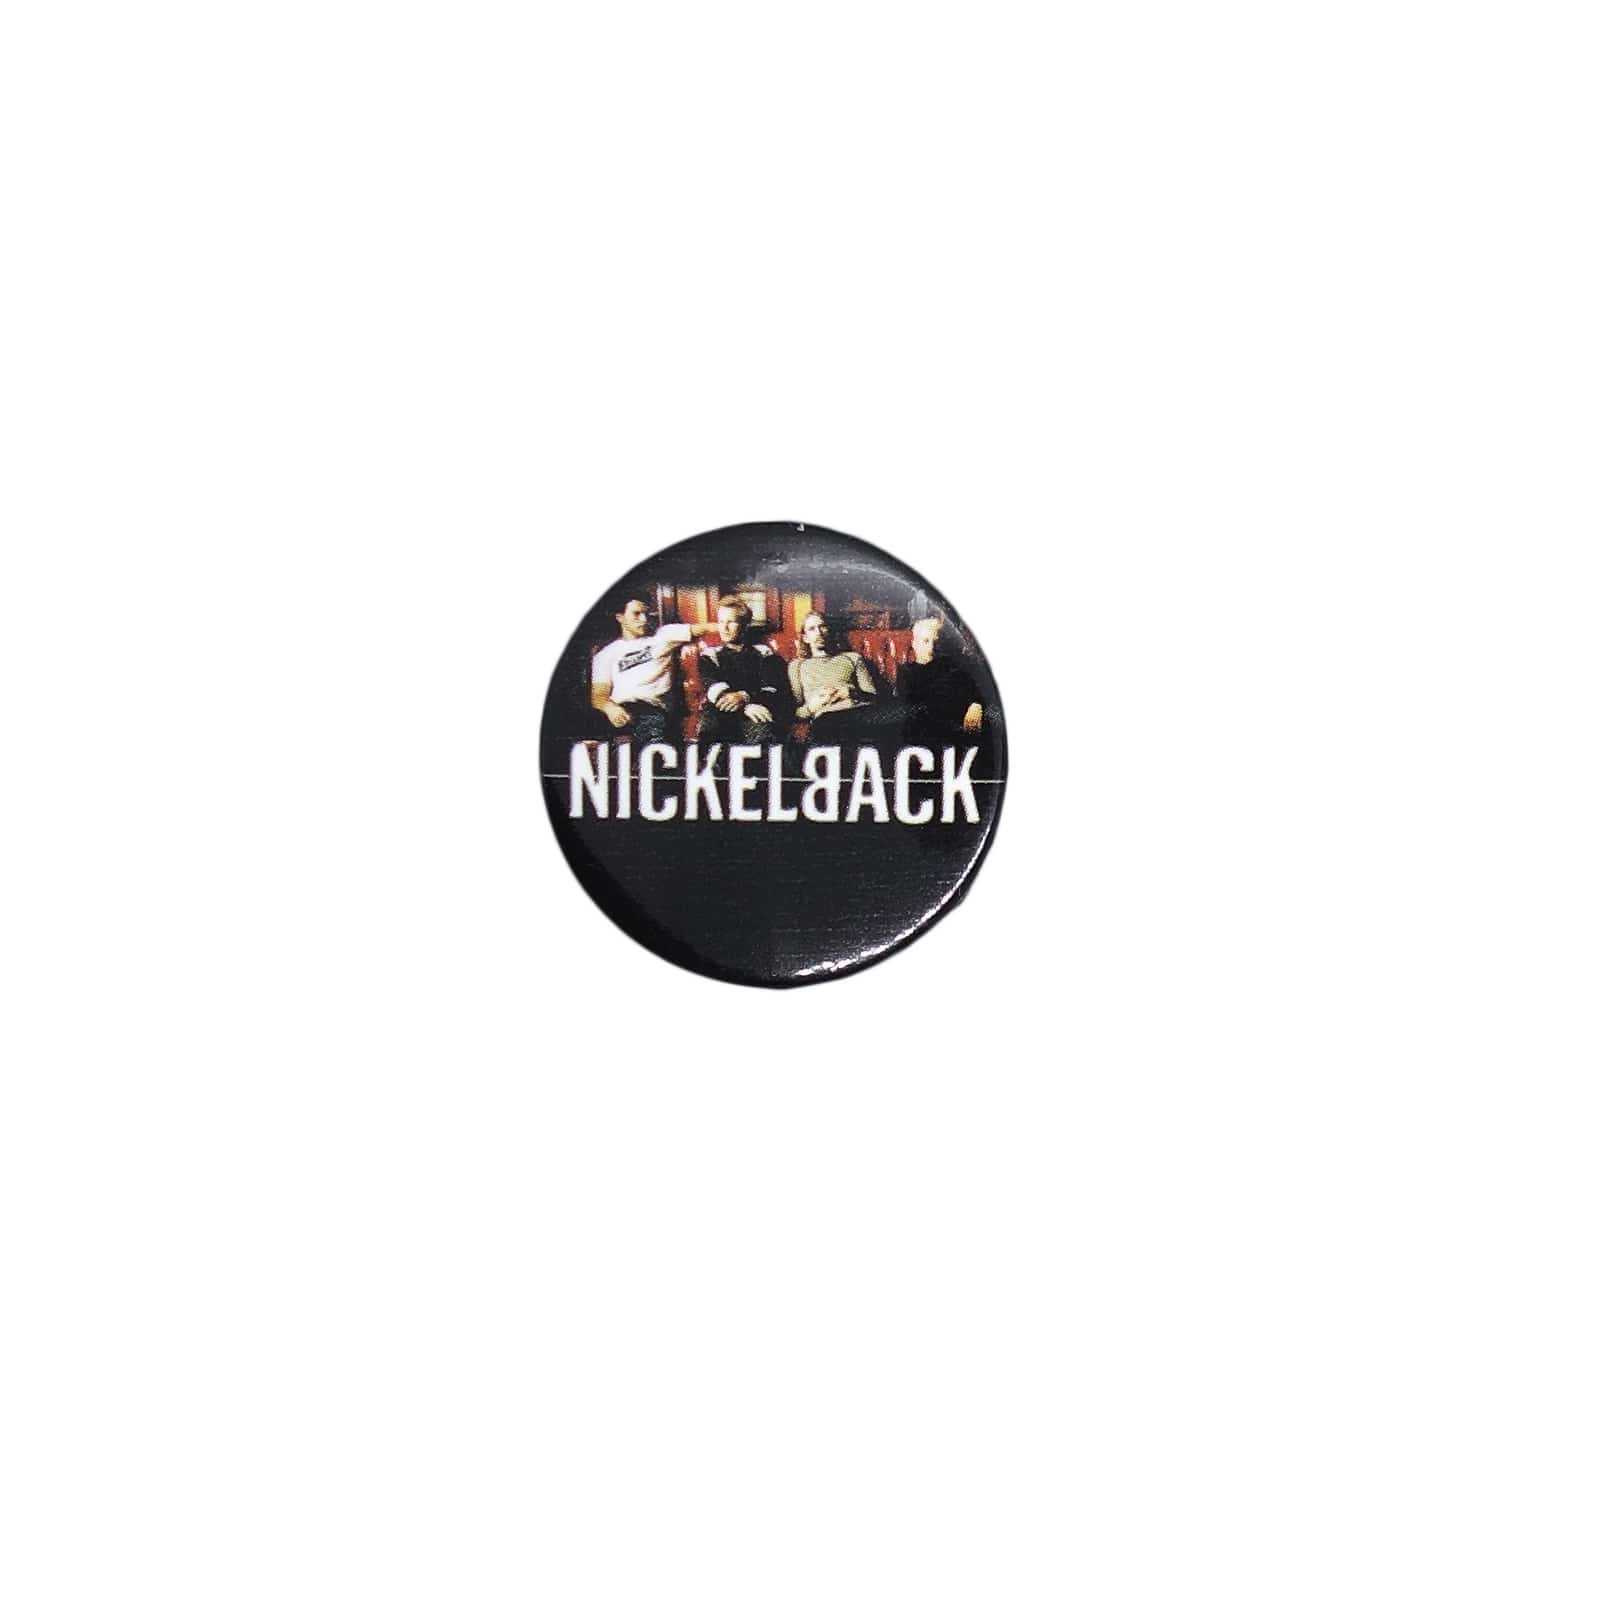 NICKELBACK ニッケルバック 缶バッジ バッチ ロックバンド